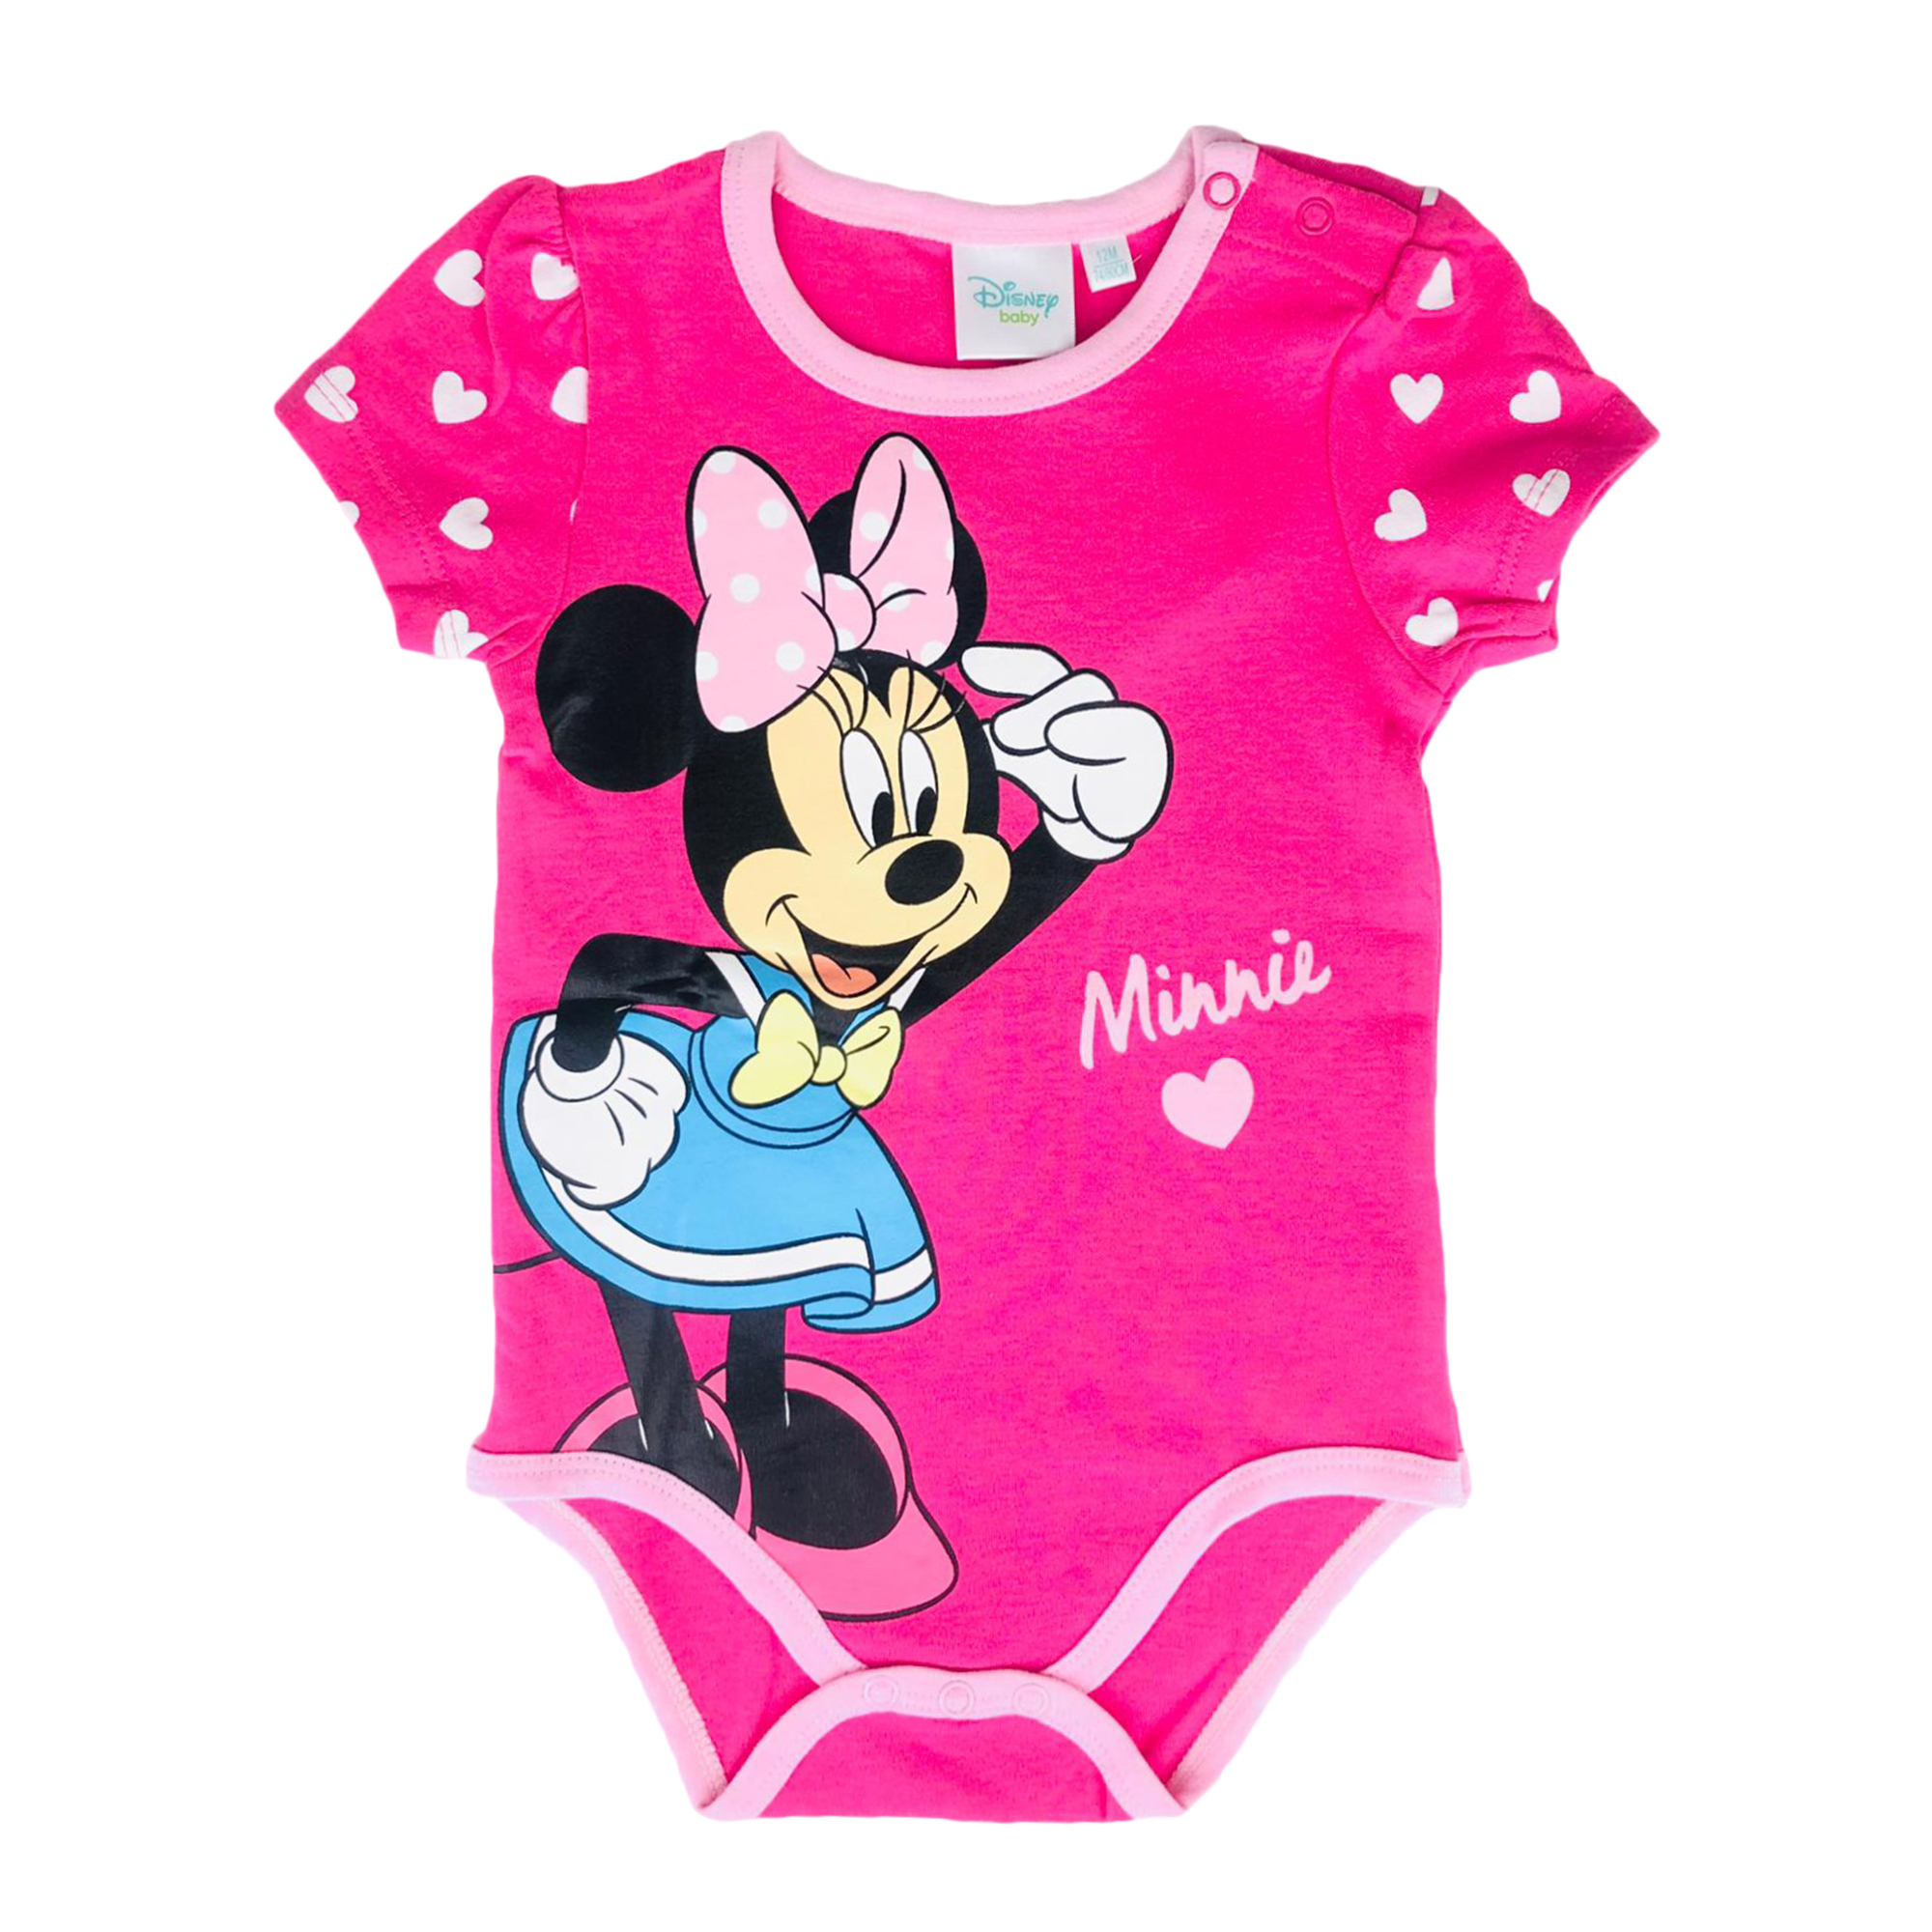 Body neonato manica corta Disney tutina baby Mickey Mouse 2615 